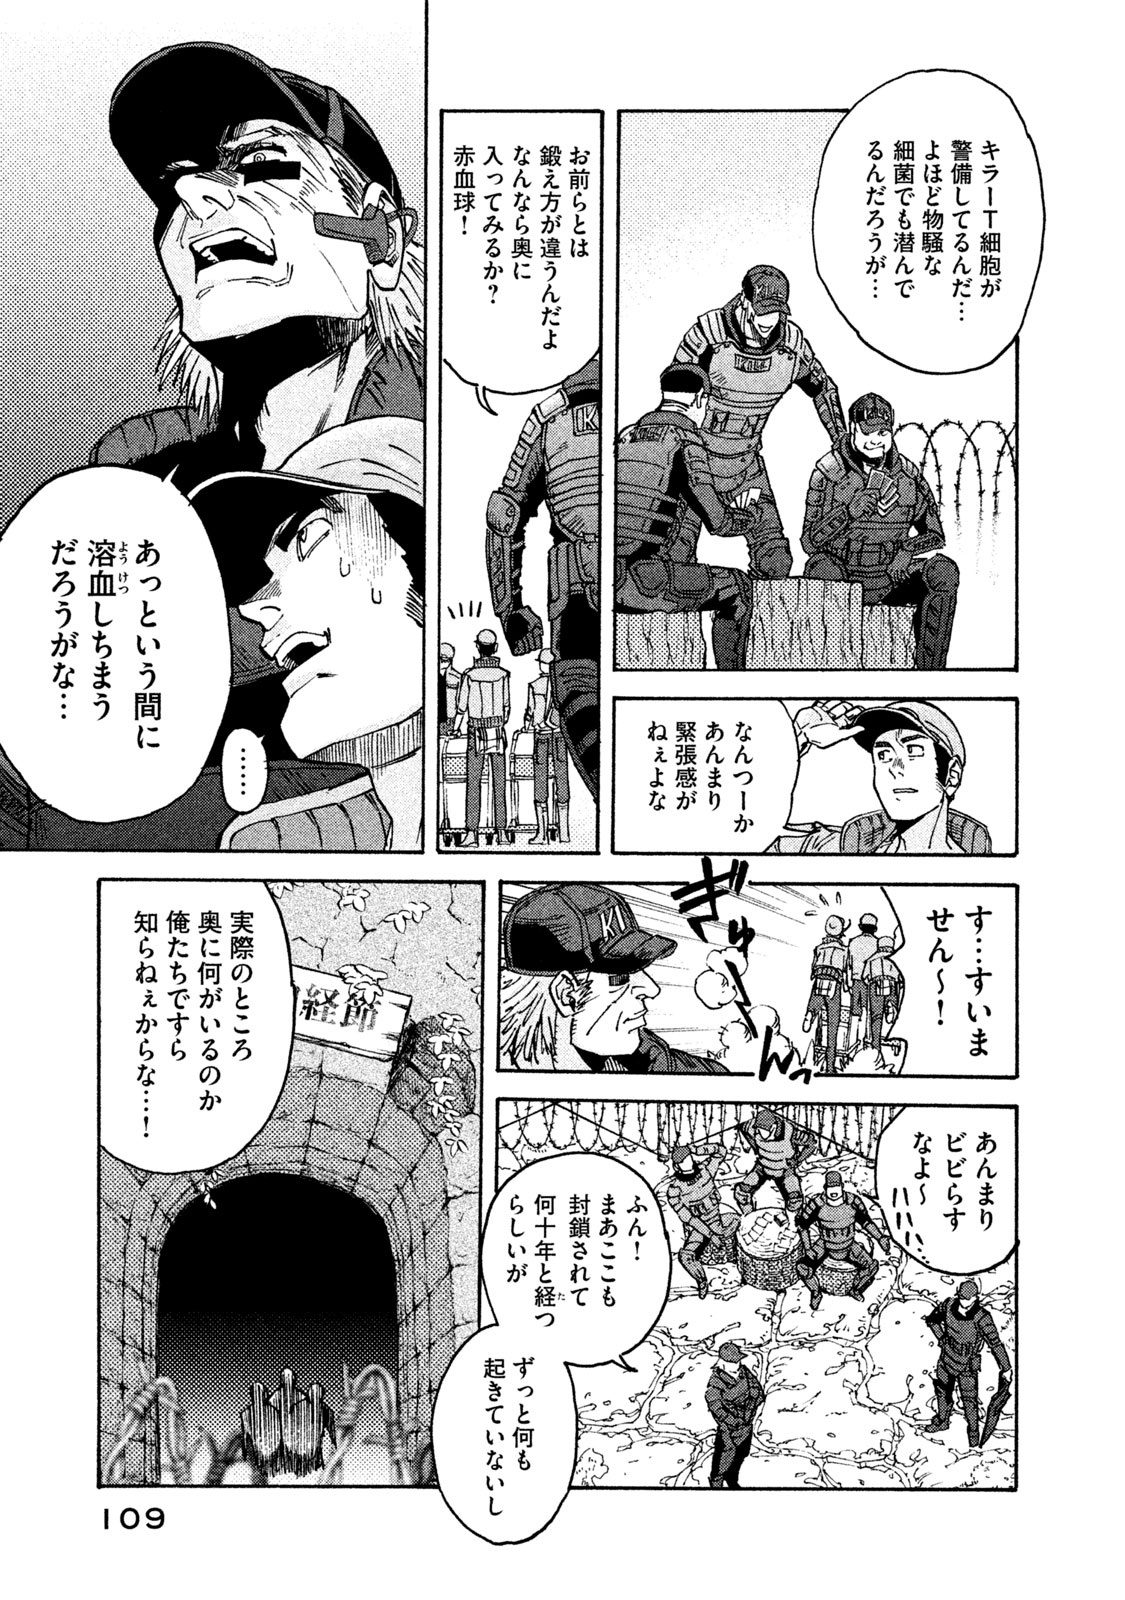 Hataraku Saibou BLACK - Chapter 23 - Page 3